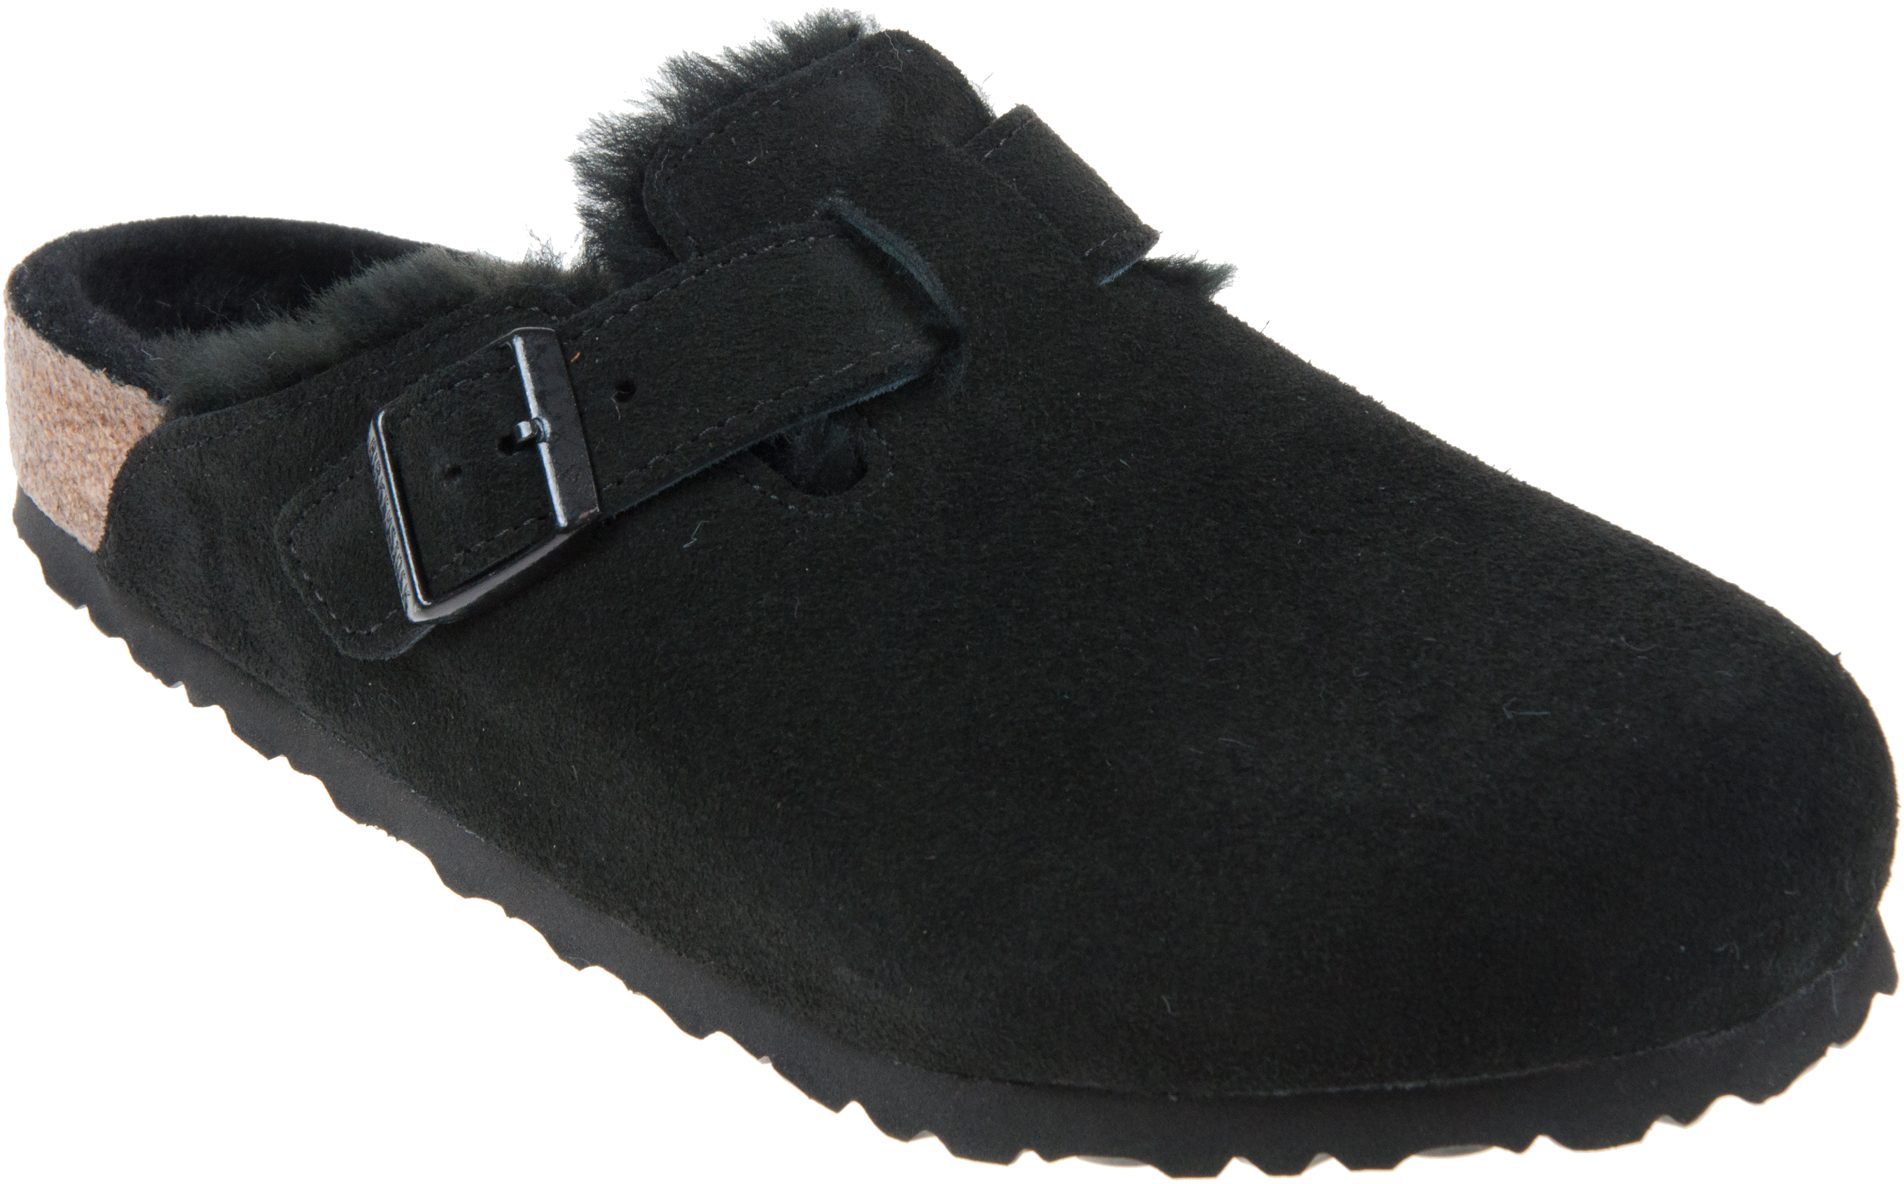 Birkenstock Boston Fur Black 259881 - Mule Slippers - Humphries Shoes